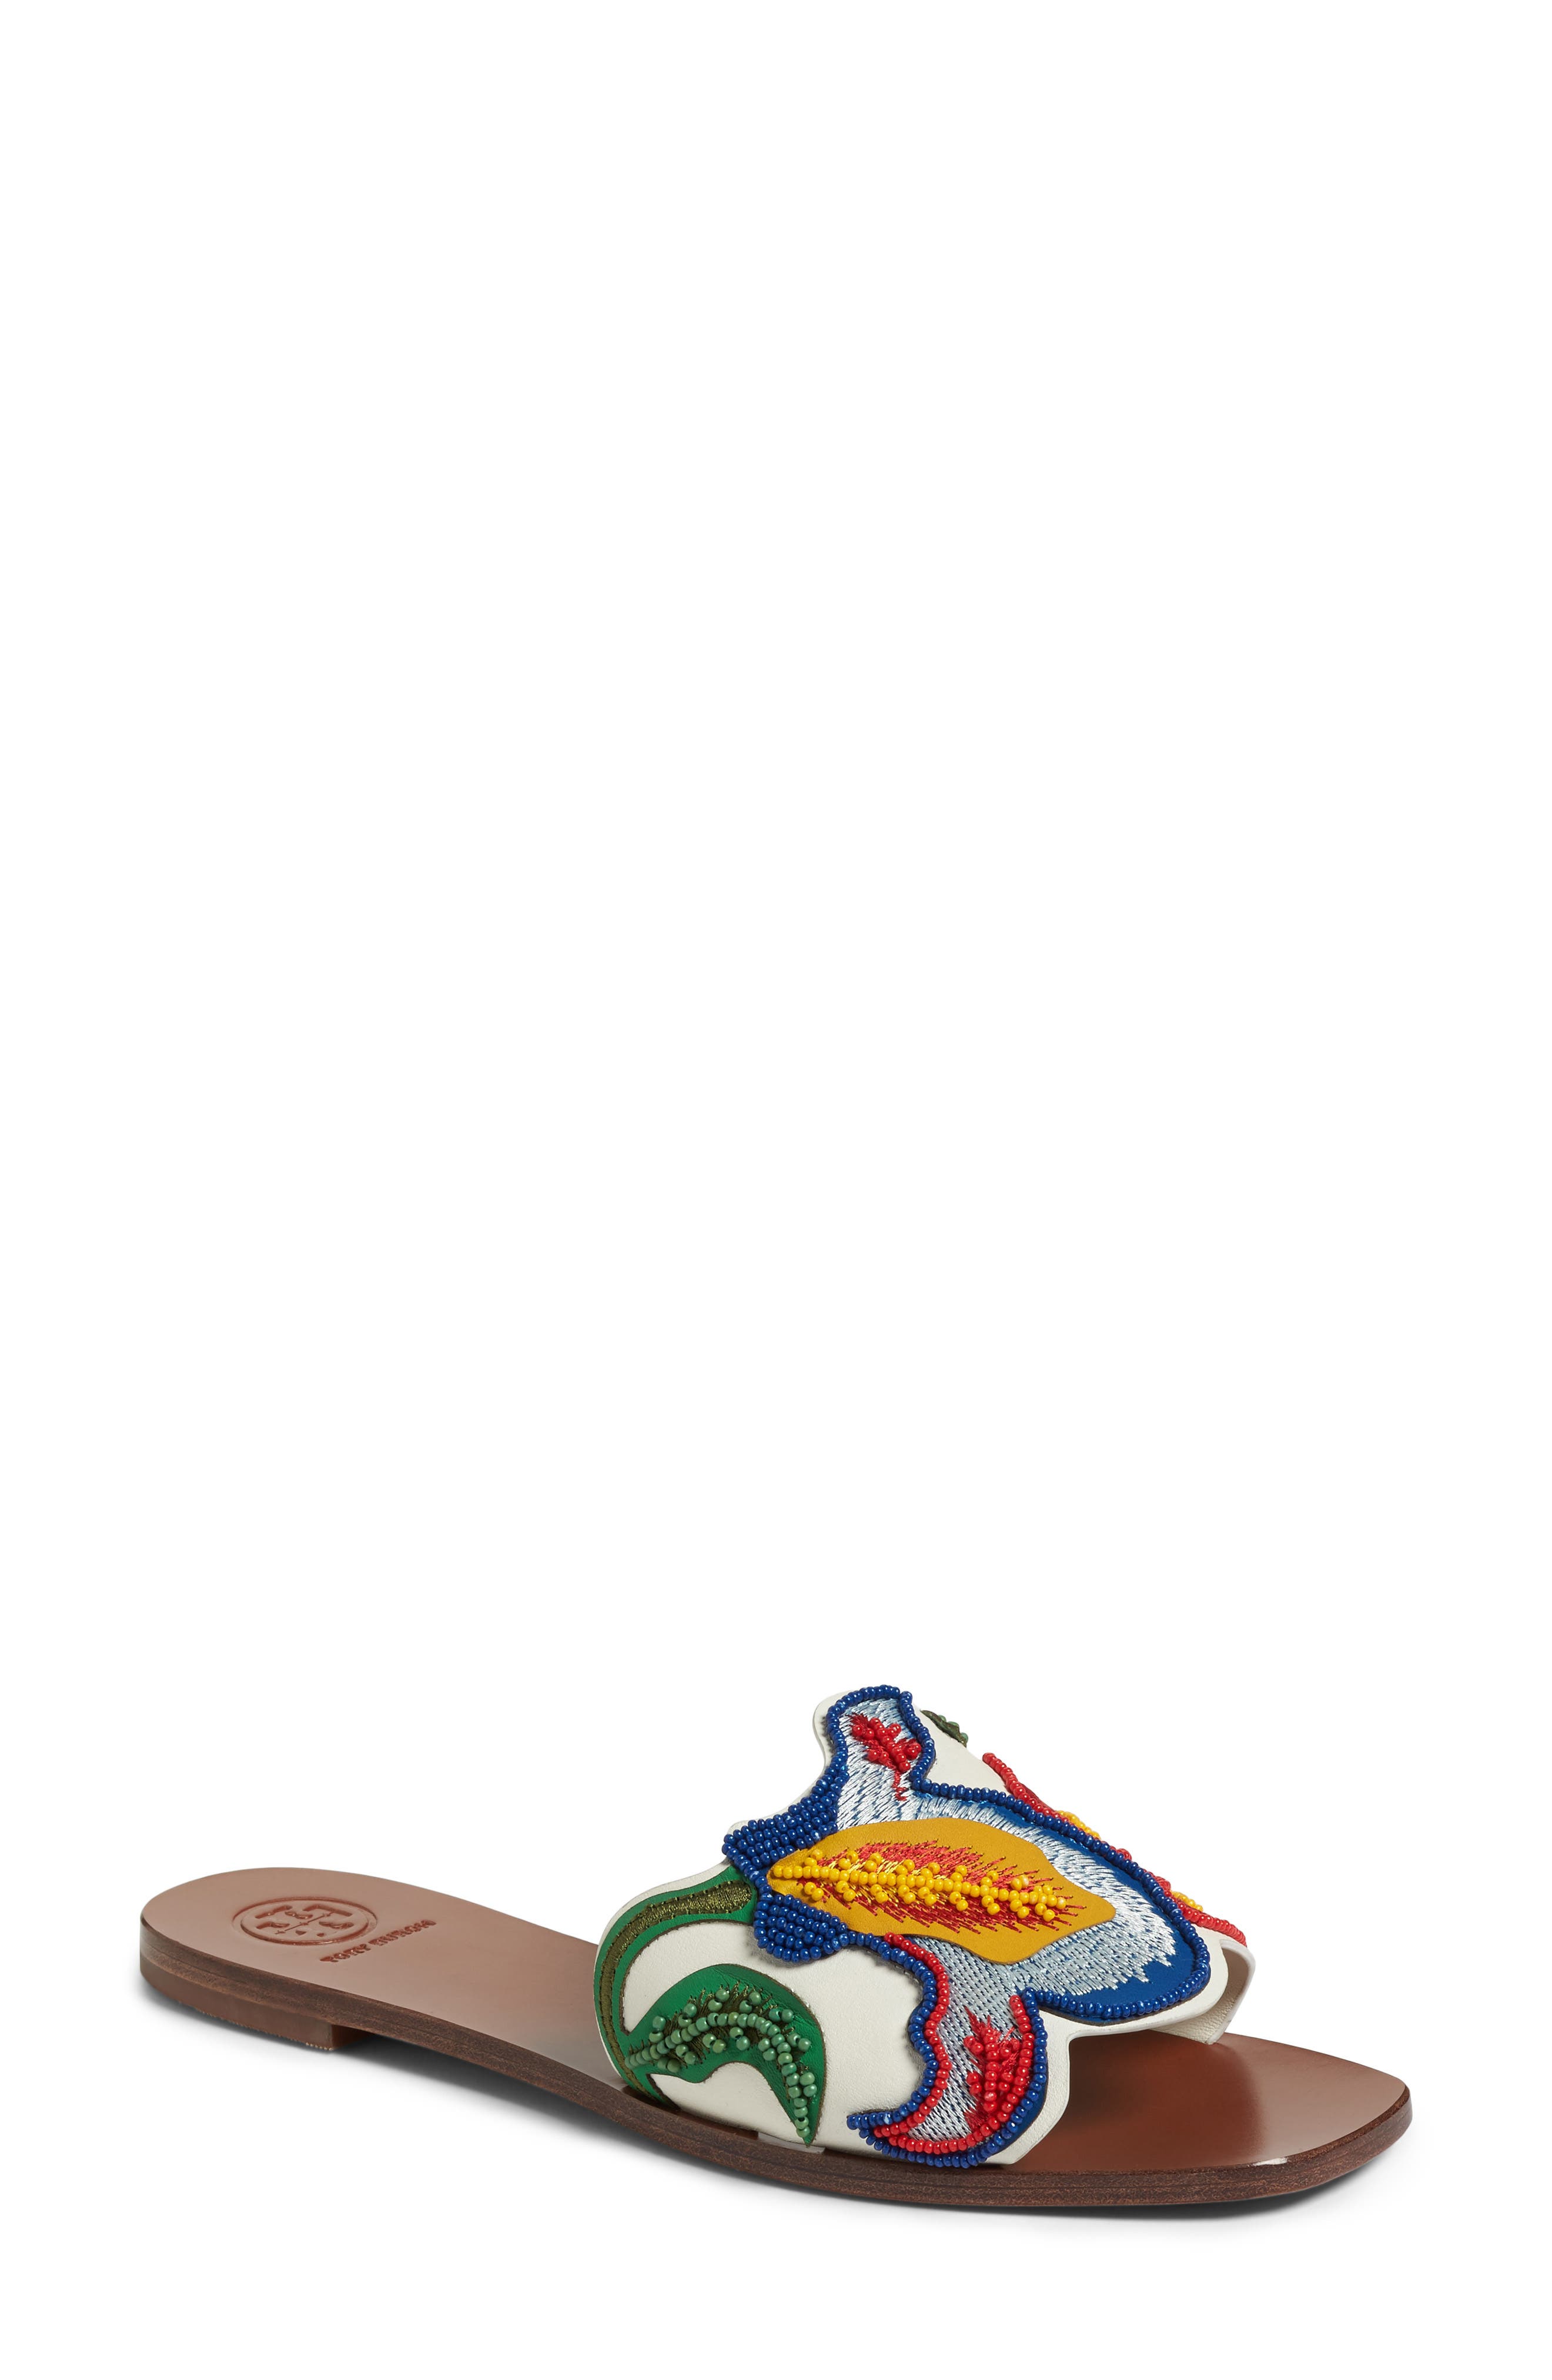 tory burch multicolor sandals